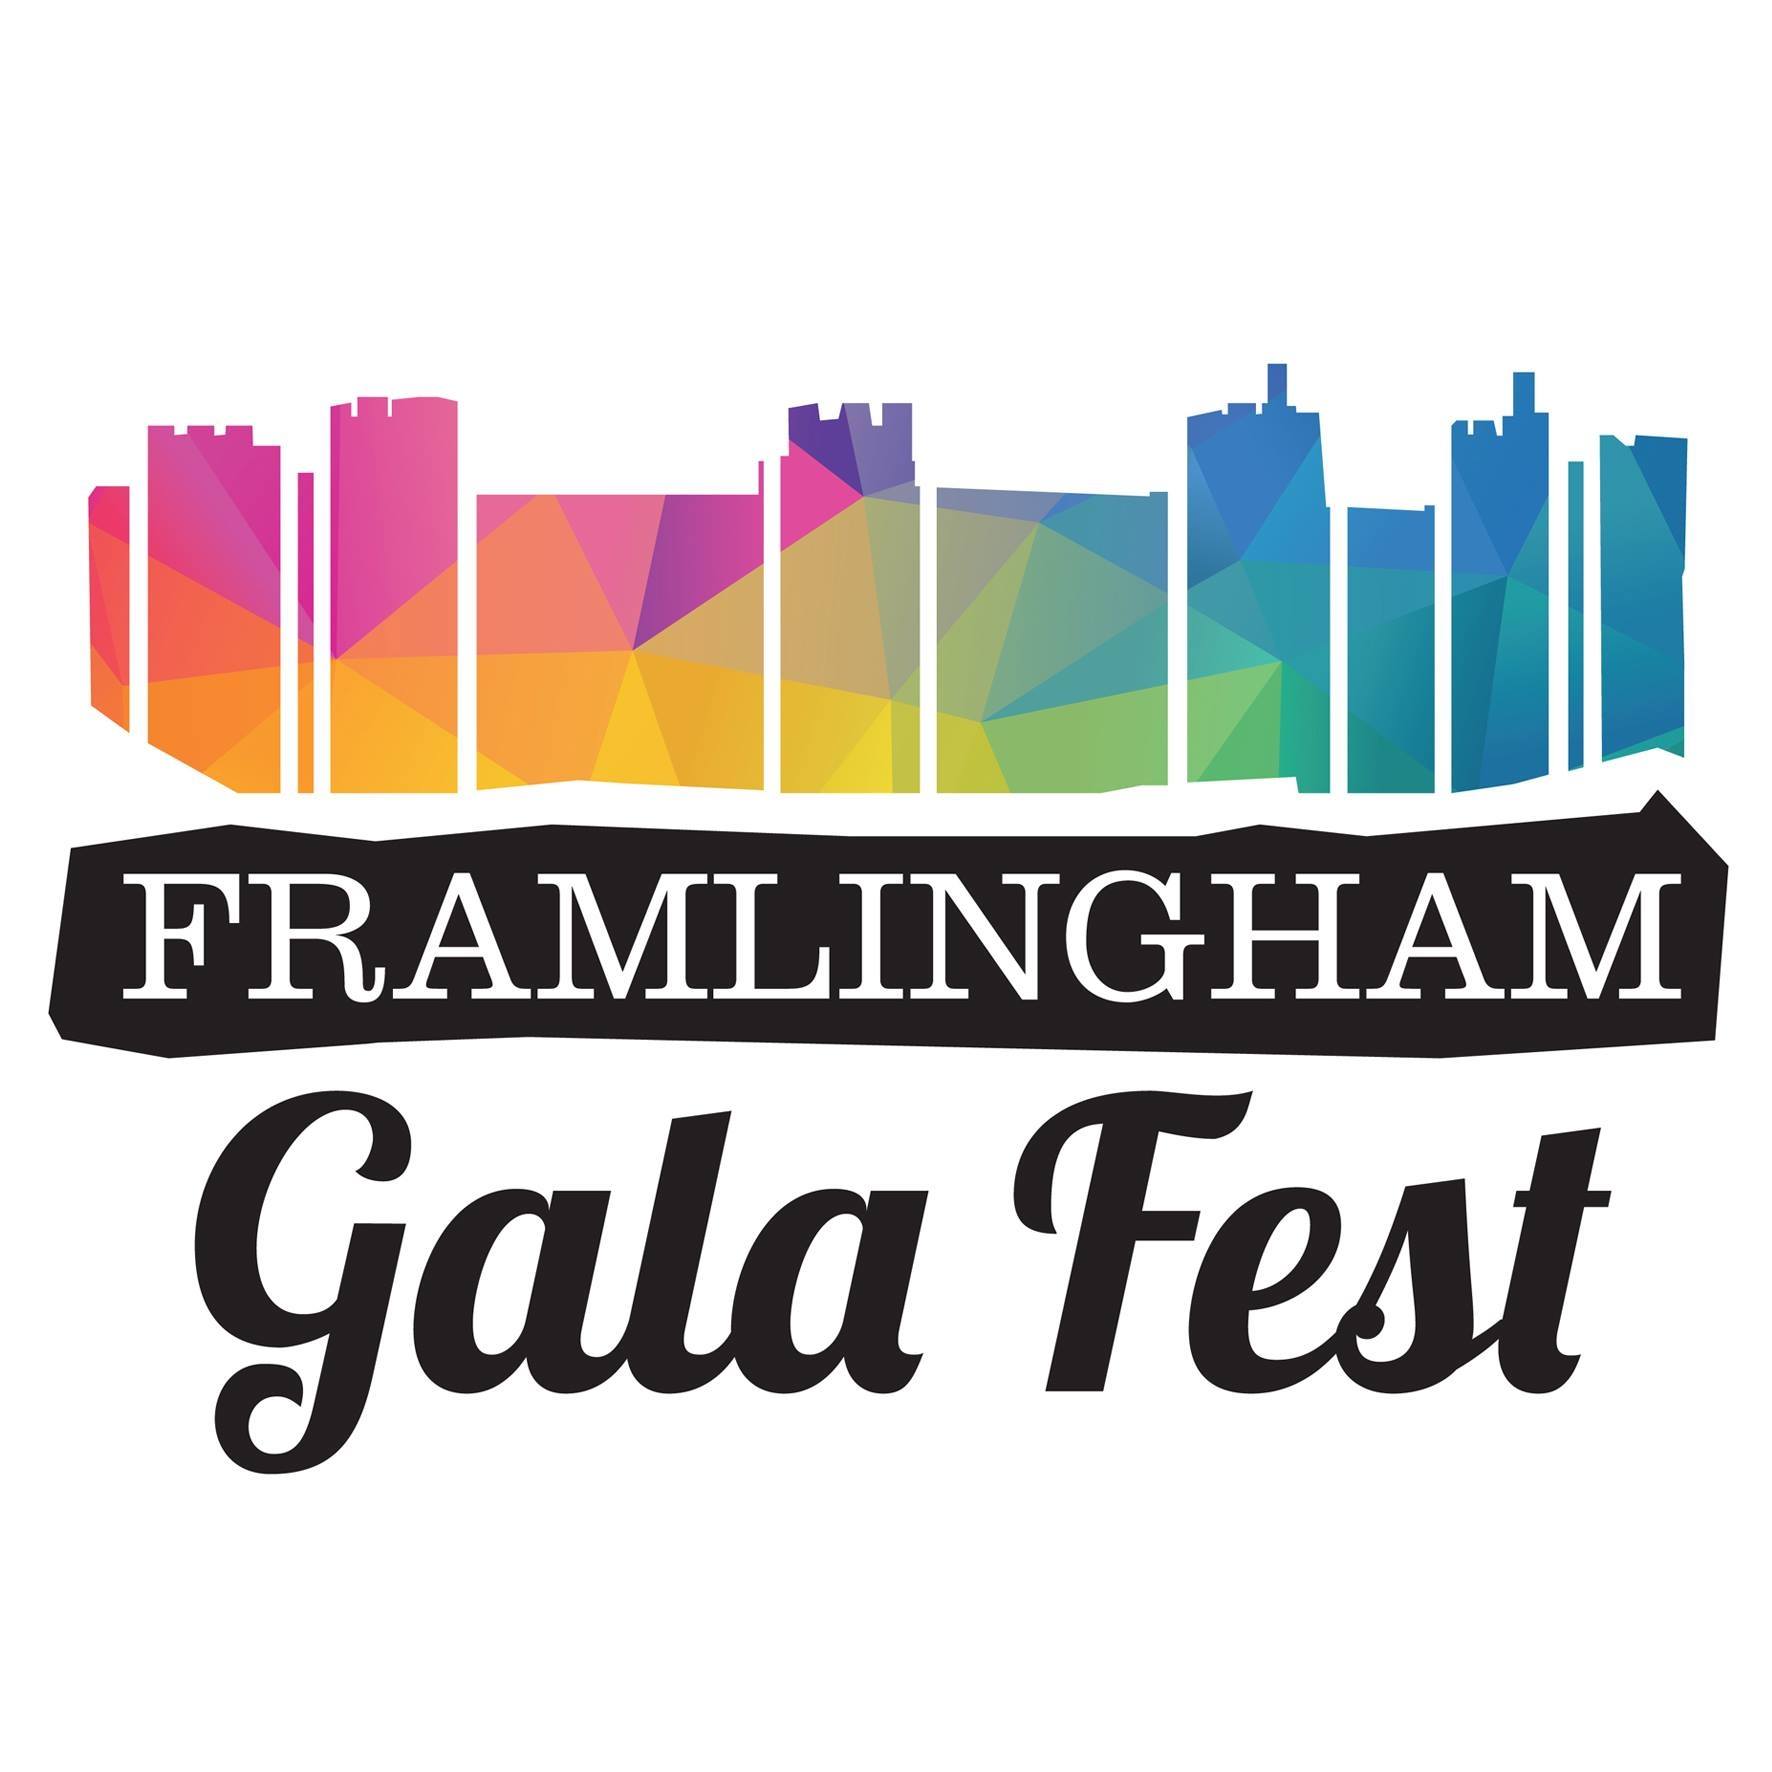 Jade MayJean Headlining Framlingham Gala Fest